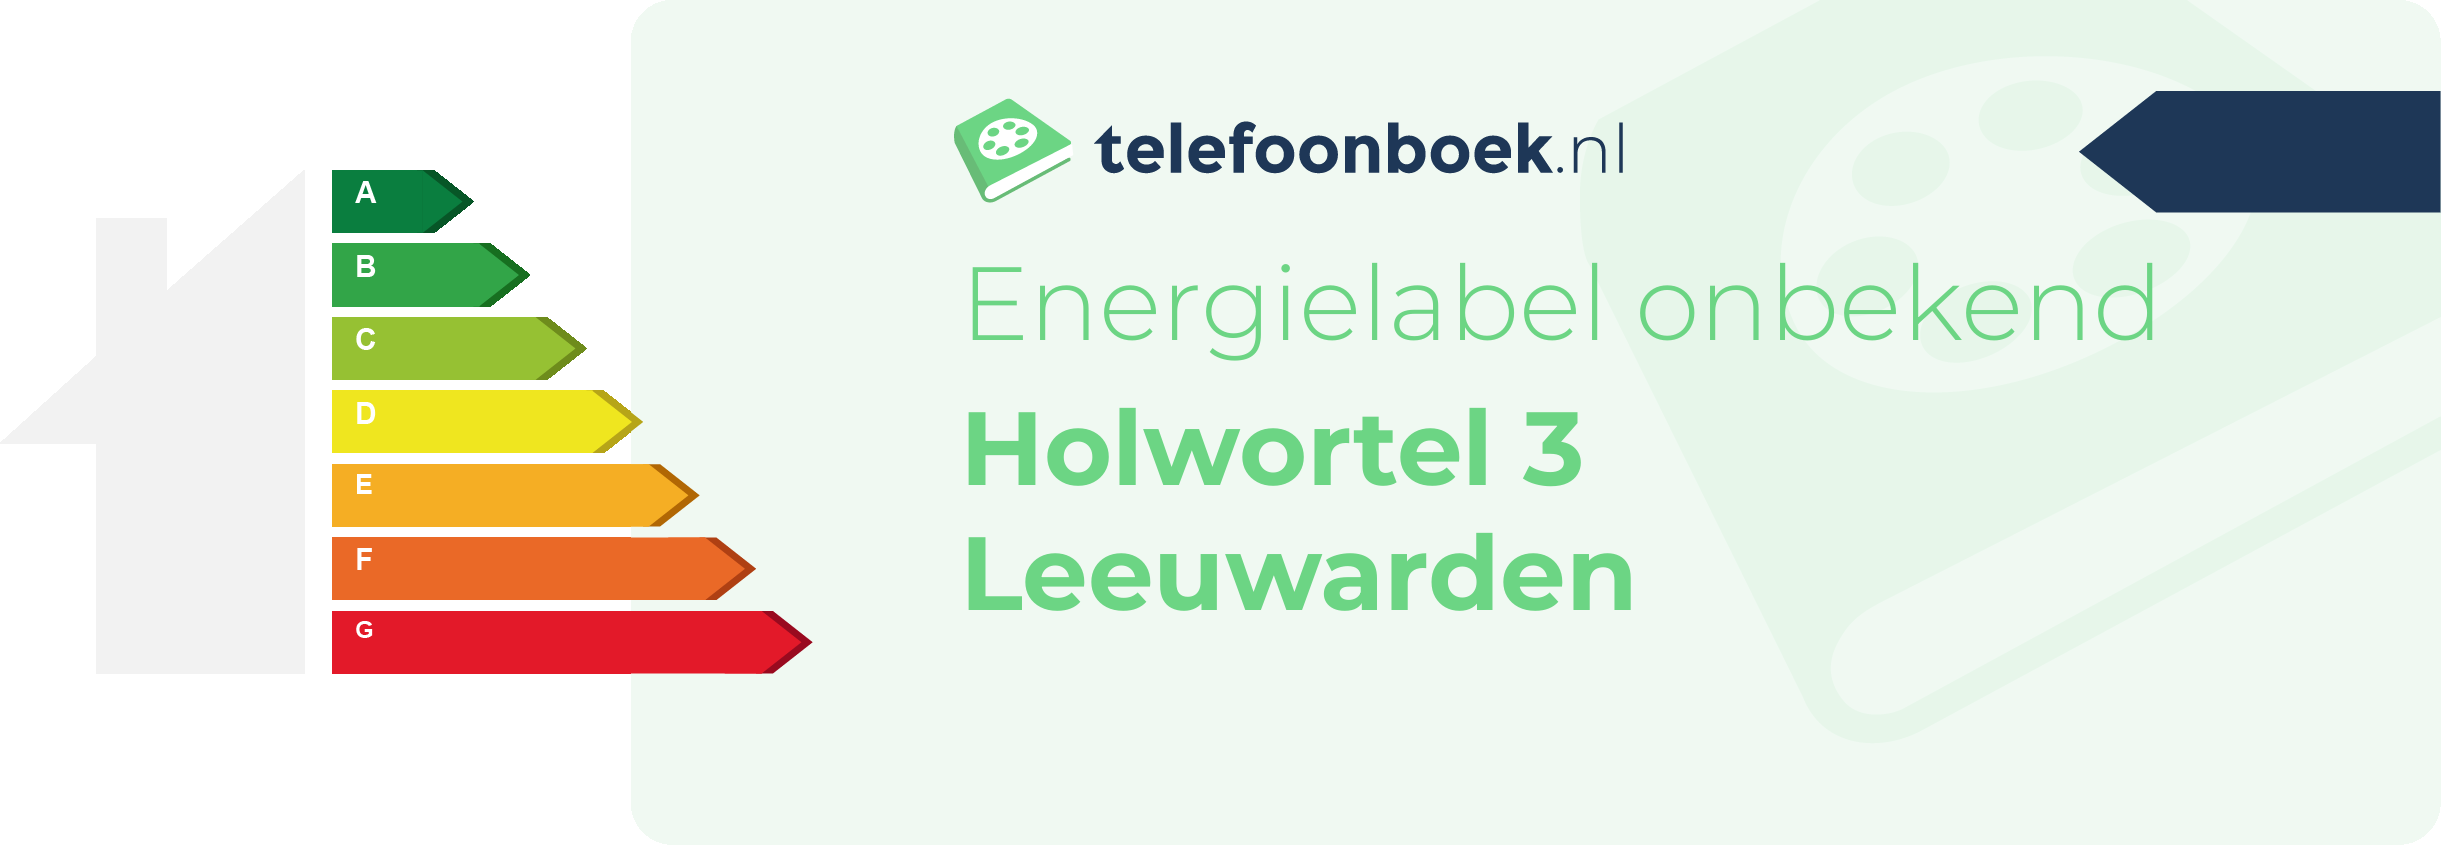 Energielabel Holwortel 3 Leeuwarden